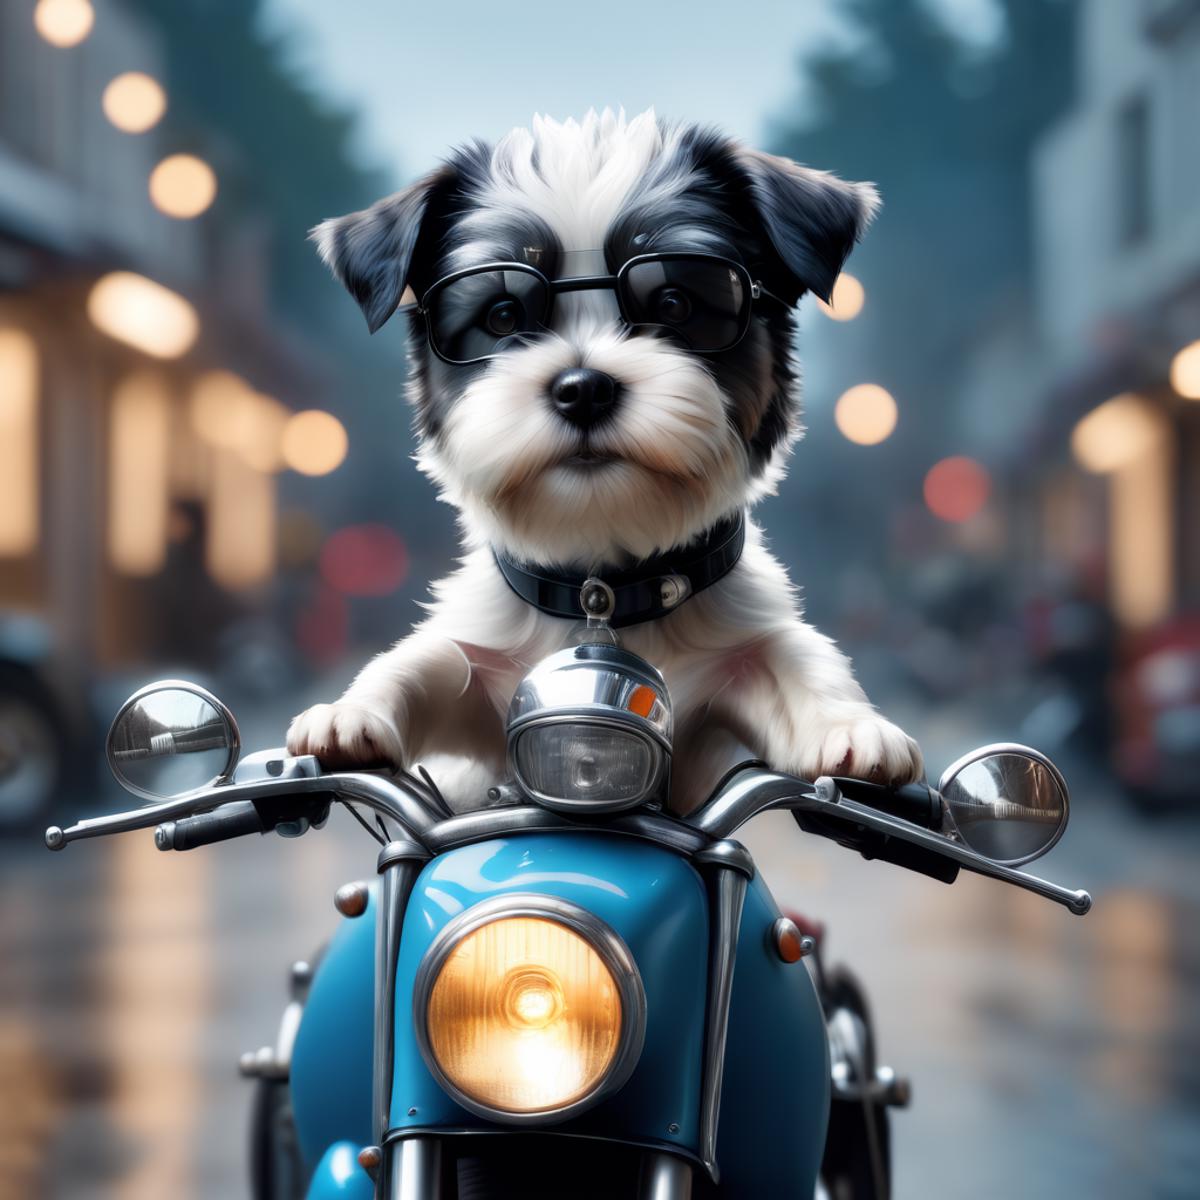 狗狗骑车-a dog is riding a motorcycle-sdxl image